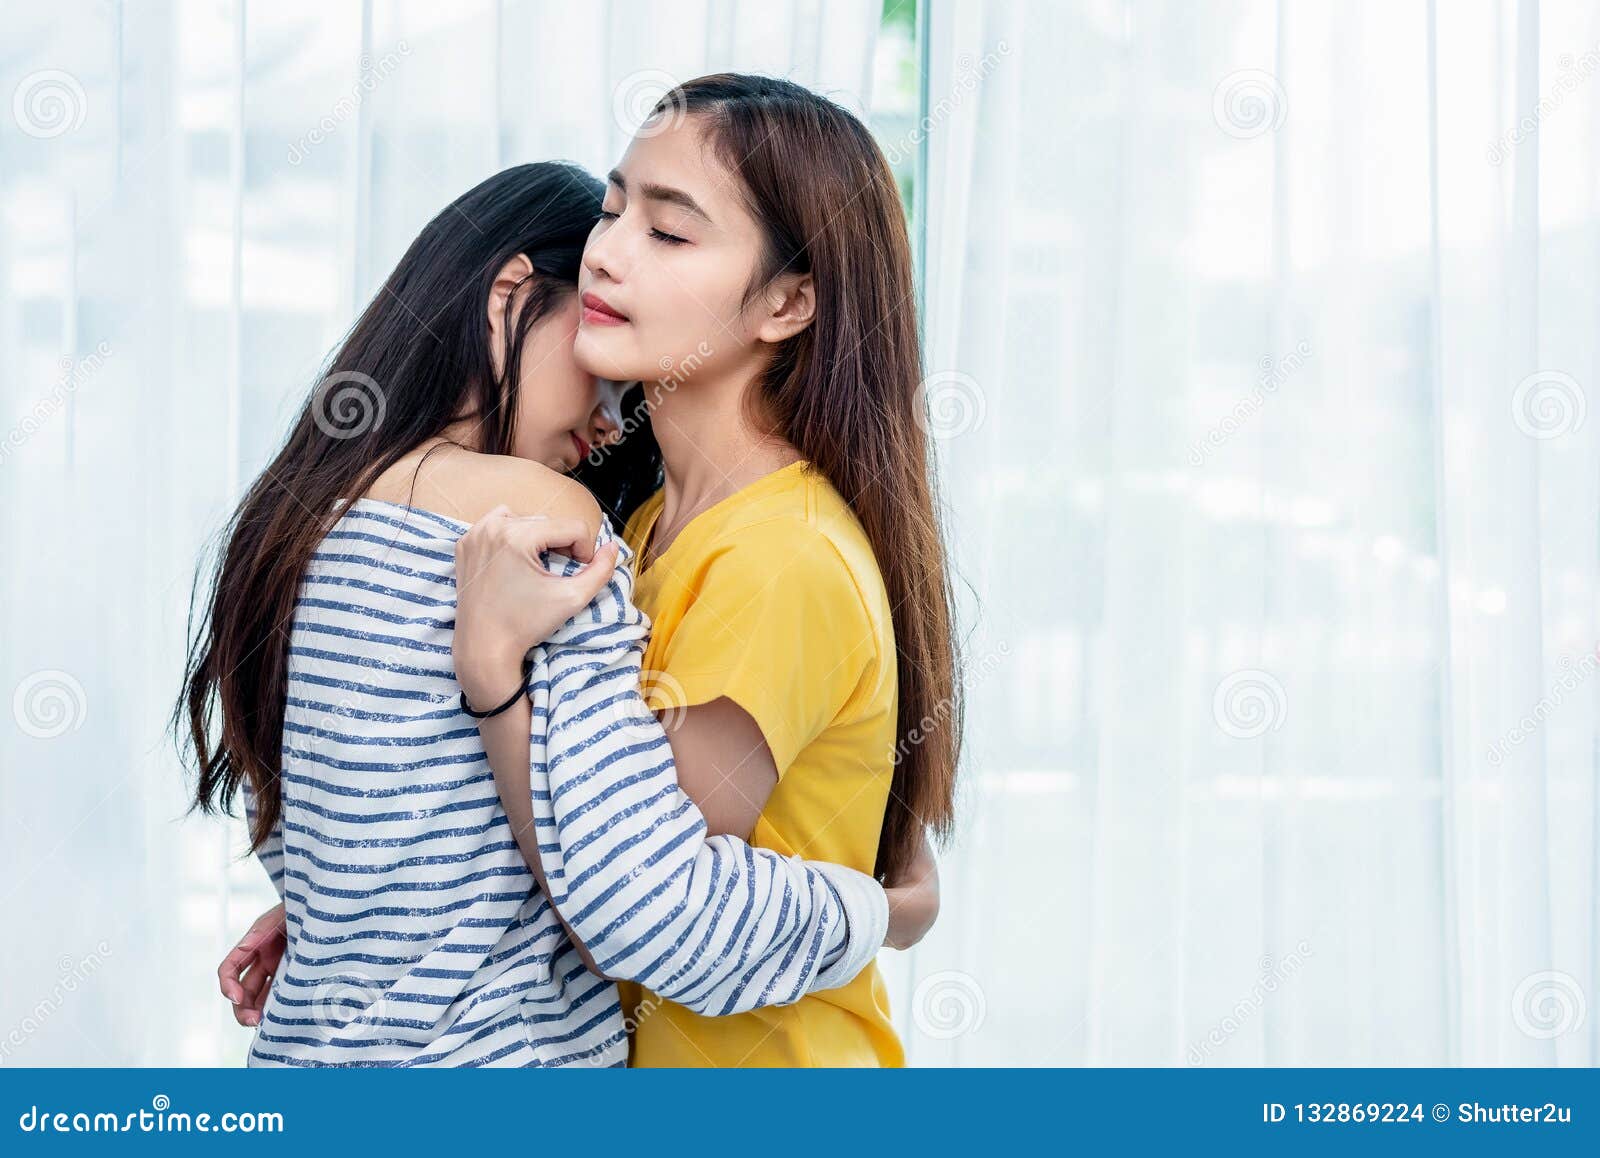 clarissa ortiz share japanese lesbians kissing photos